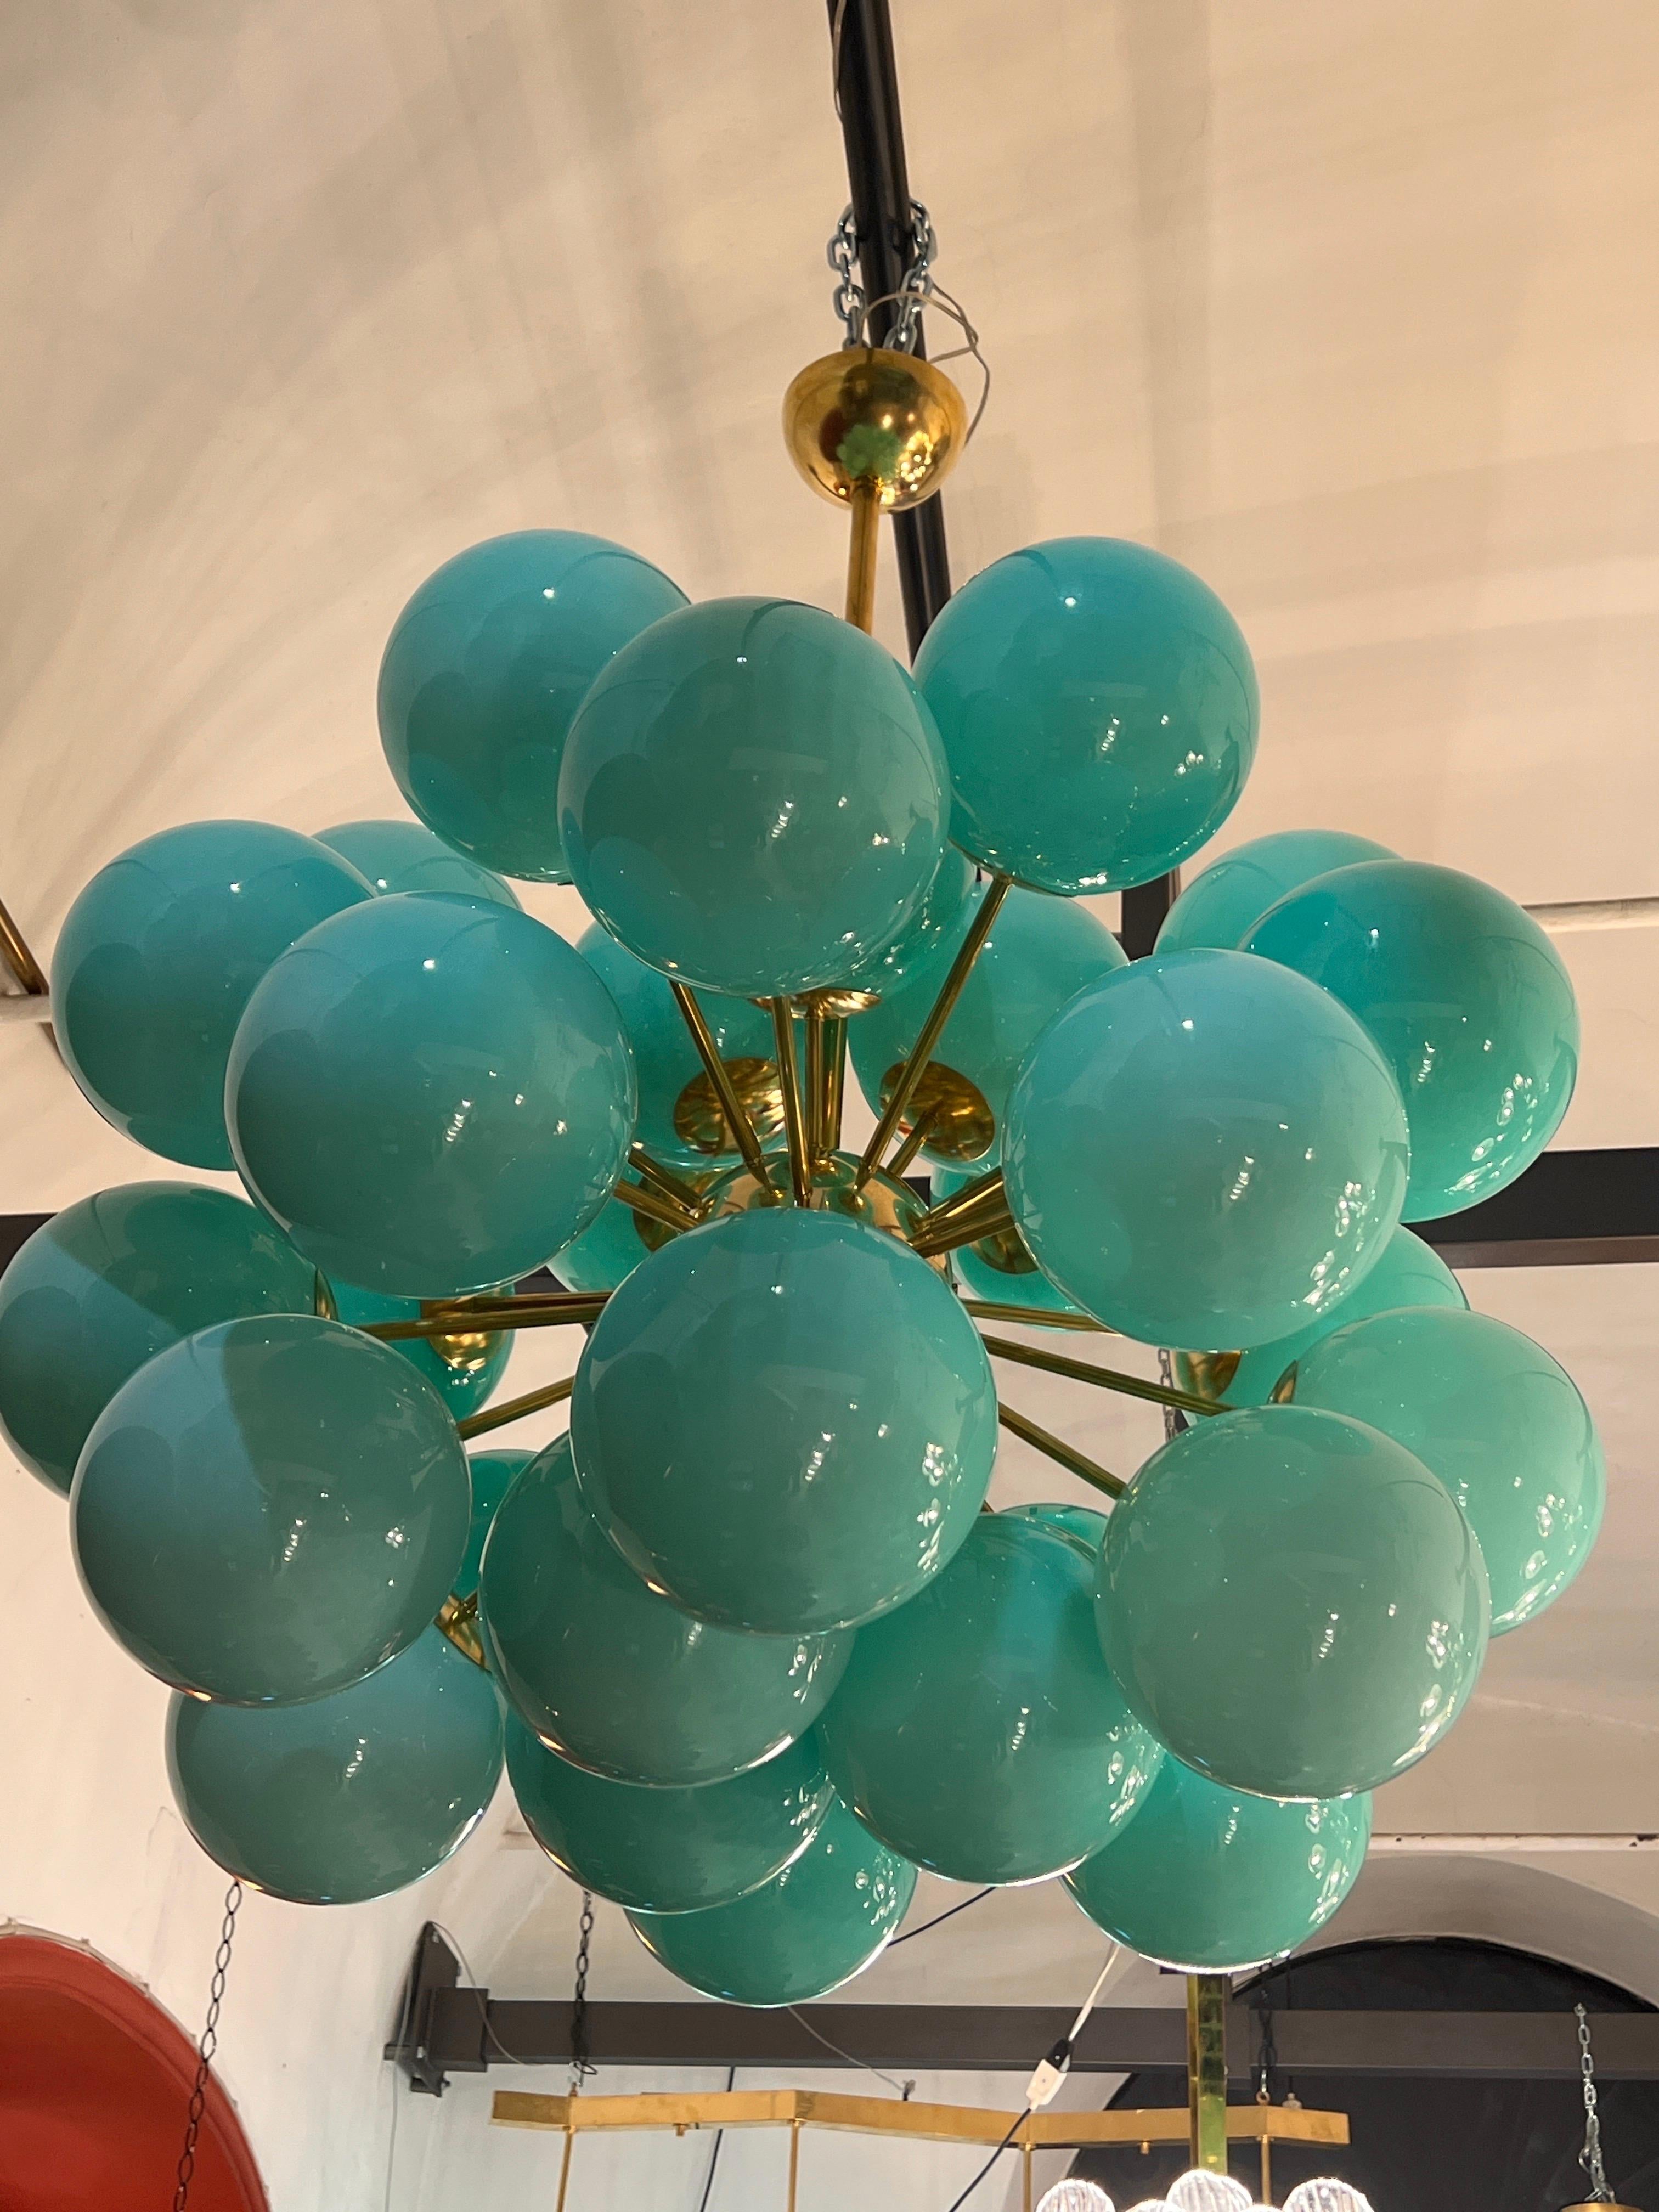 Vintage Brass Sputnik Chandelier with 30 Tiffany Green Glass Spheres. 
30 lights bulbs.
